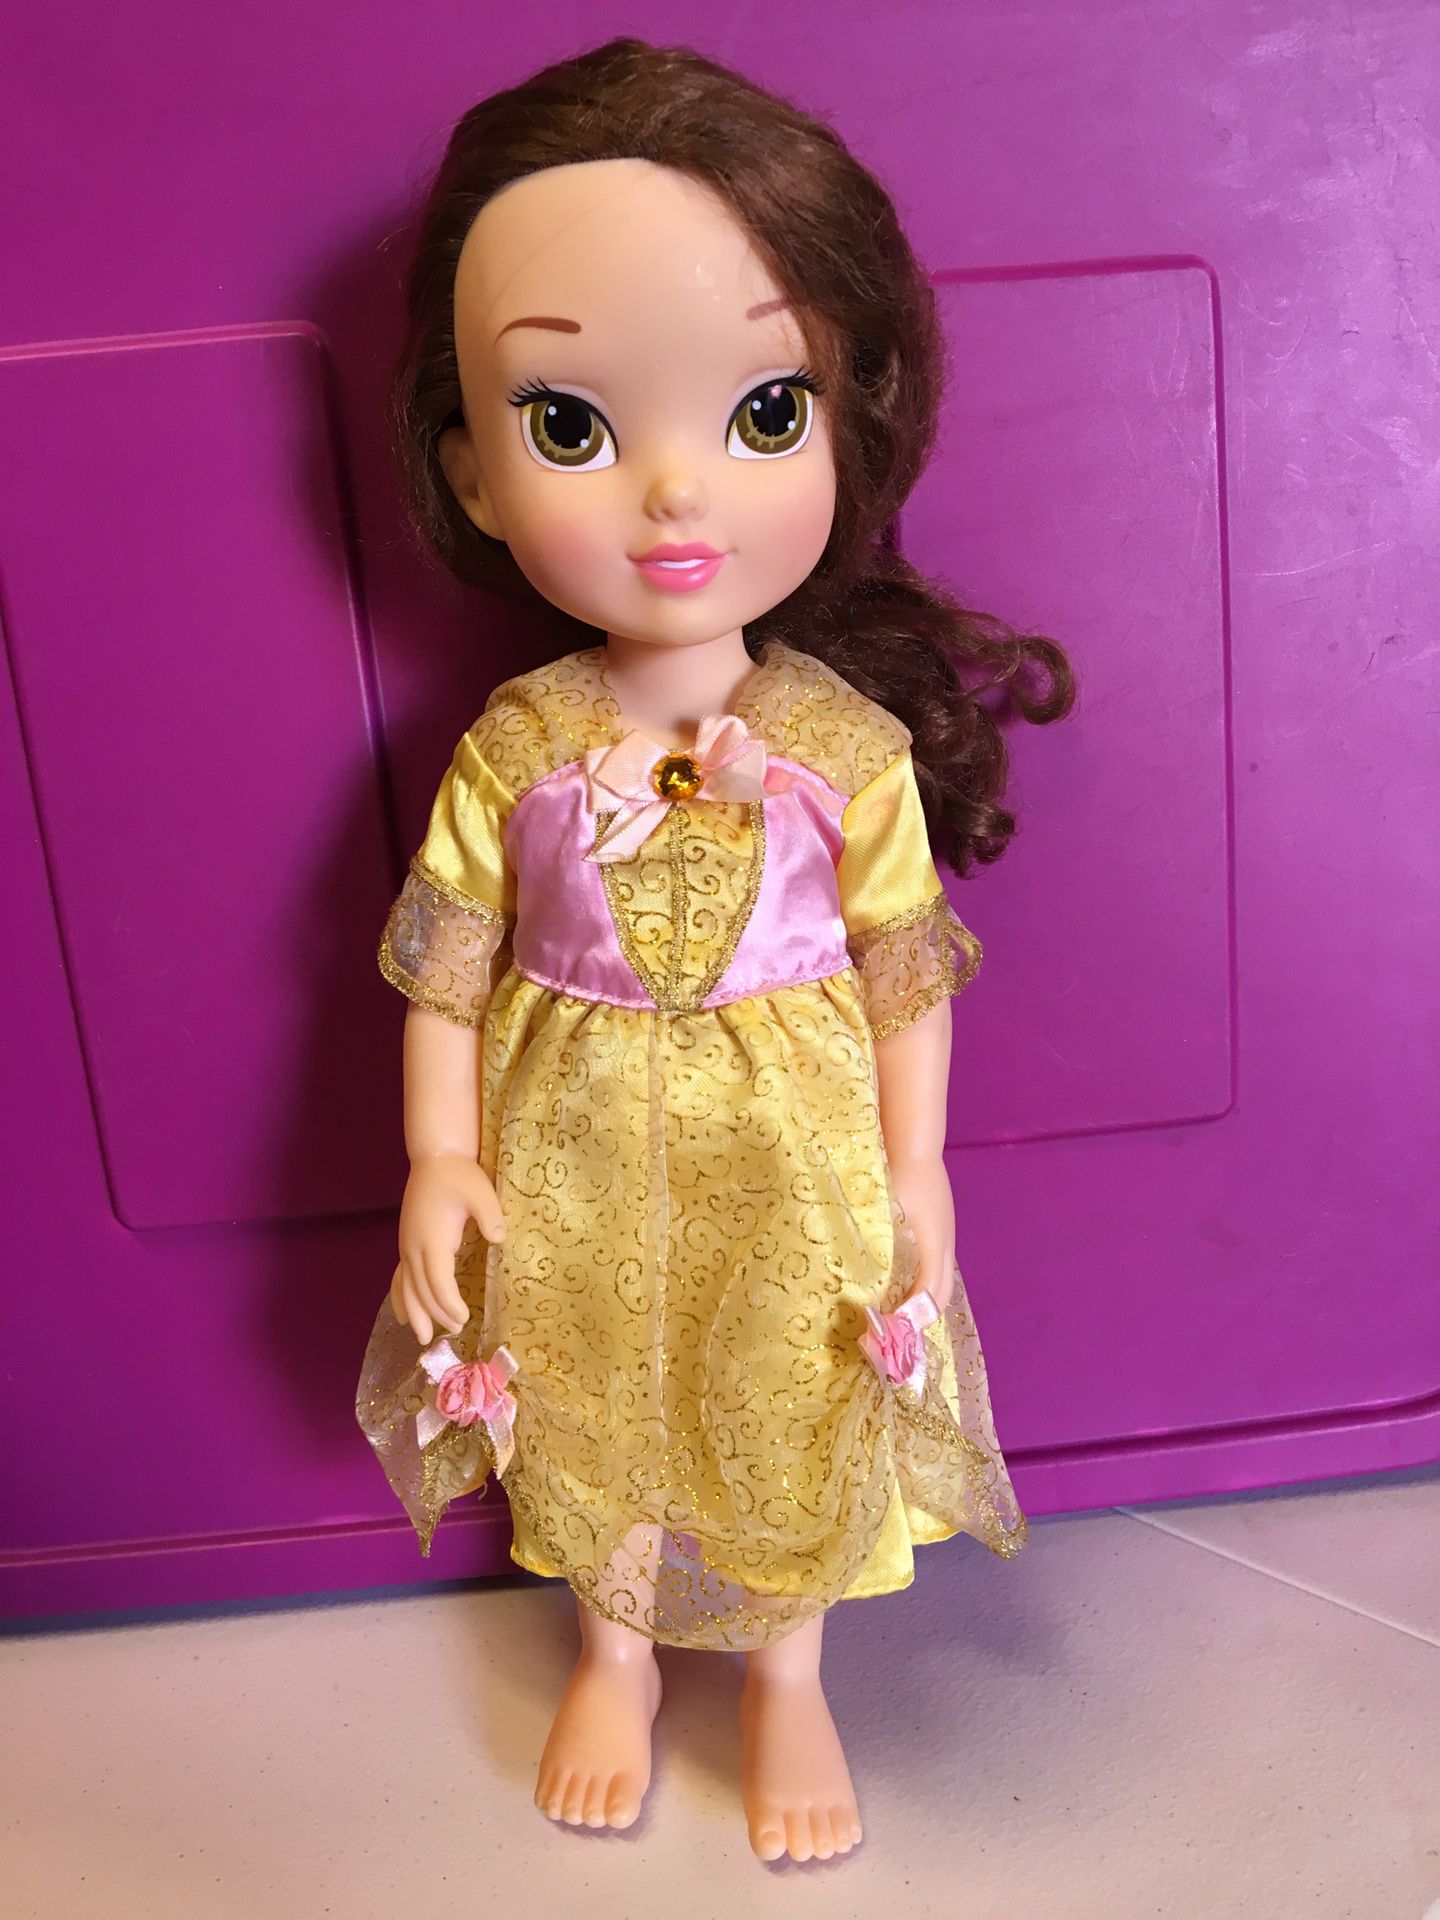 Ana & Belle Disney dolls